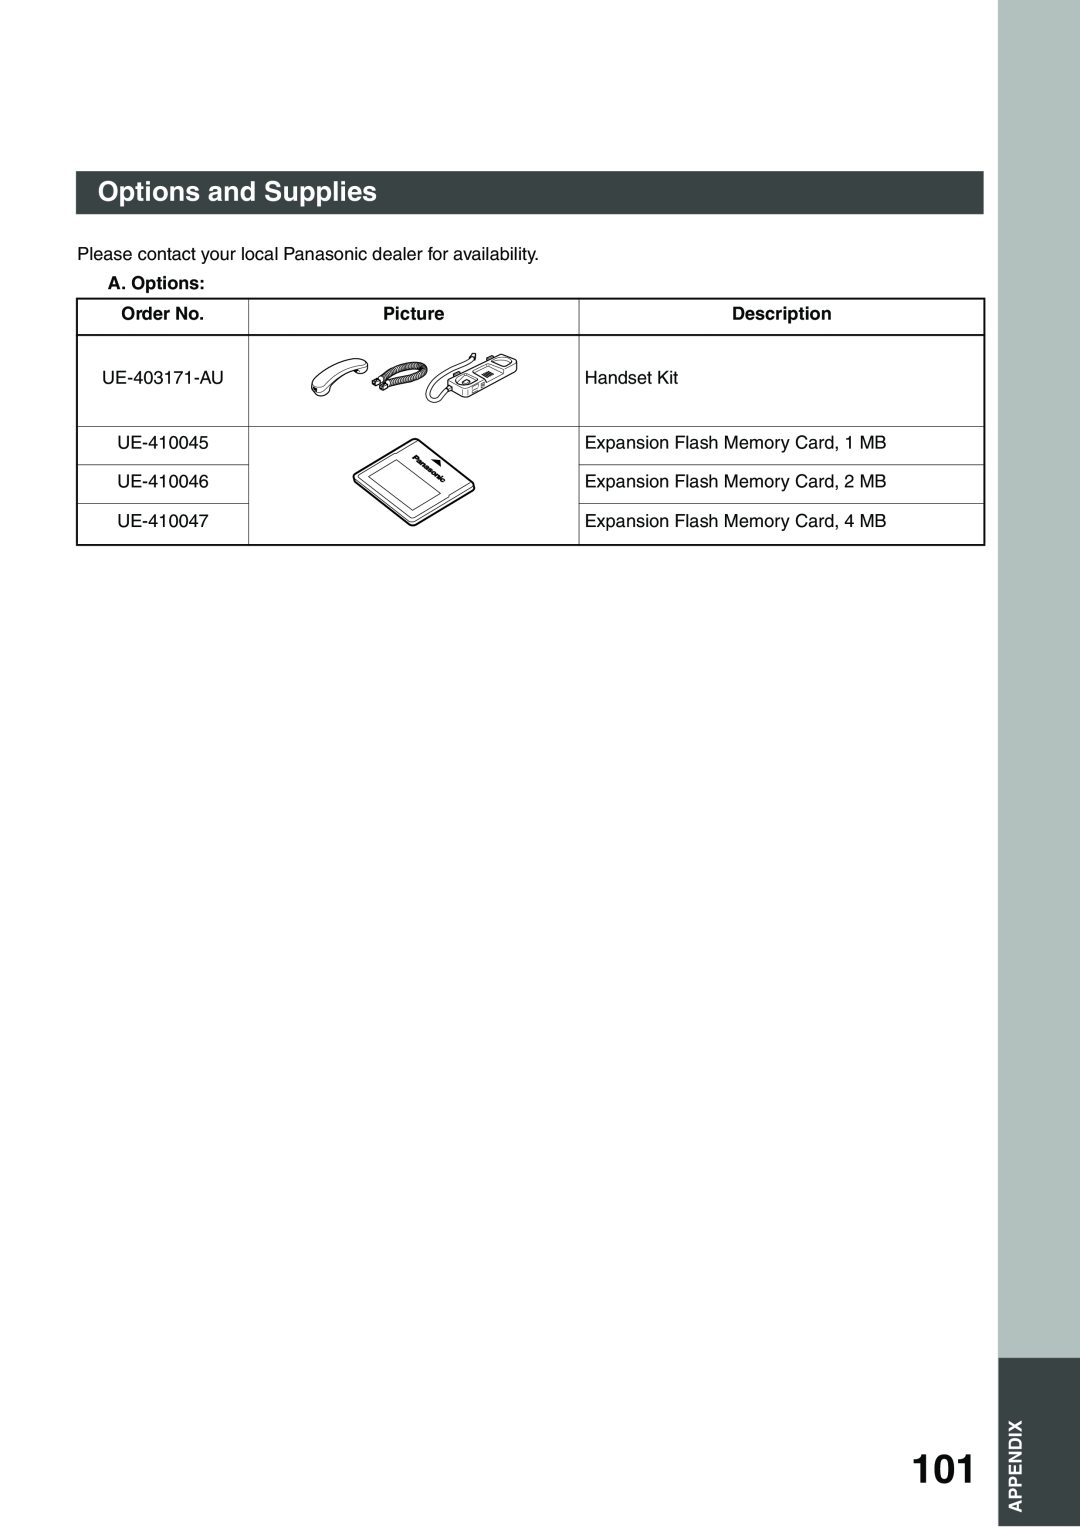 Panasonic DP-135FP appendix Options and Supplies, A. Options, Order No, Picture, Description 